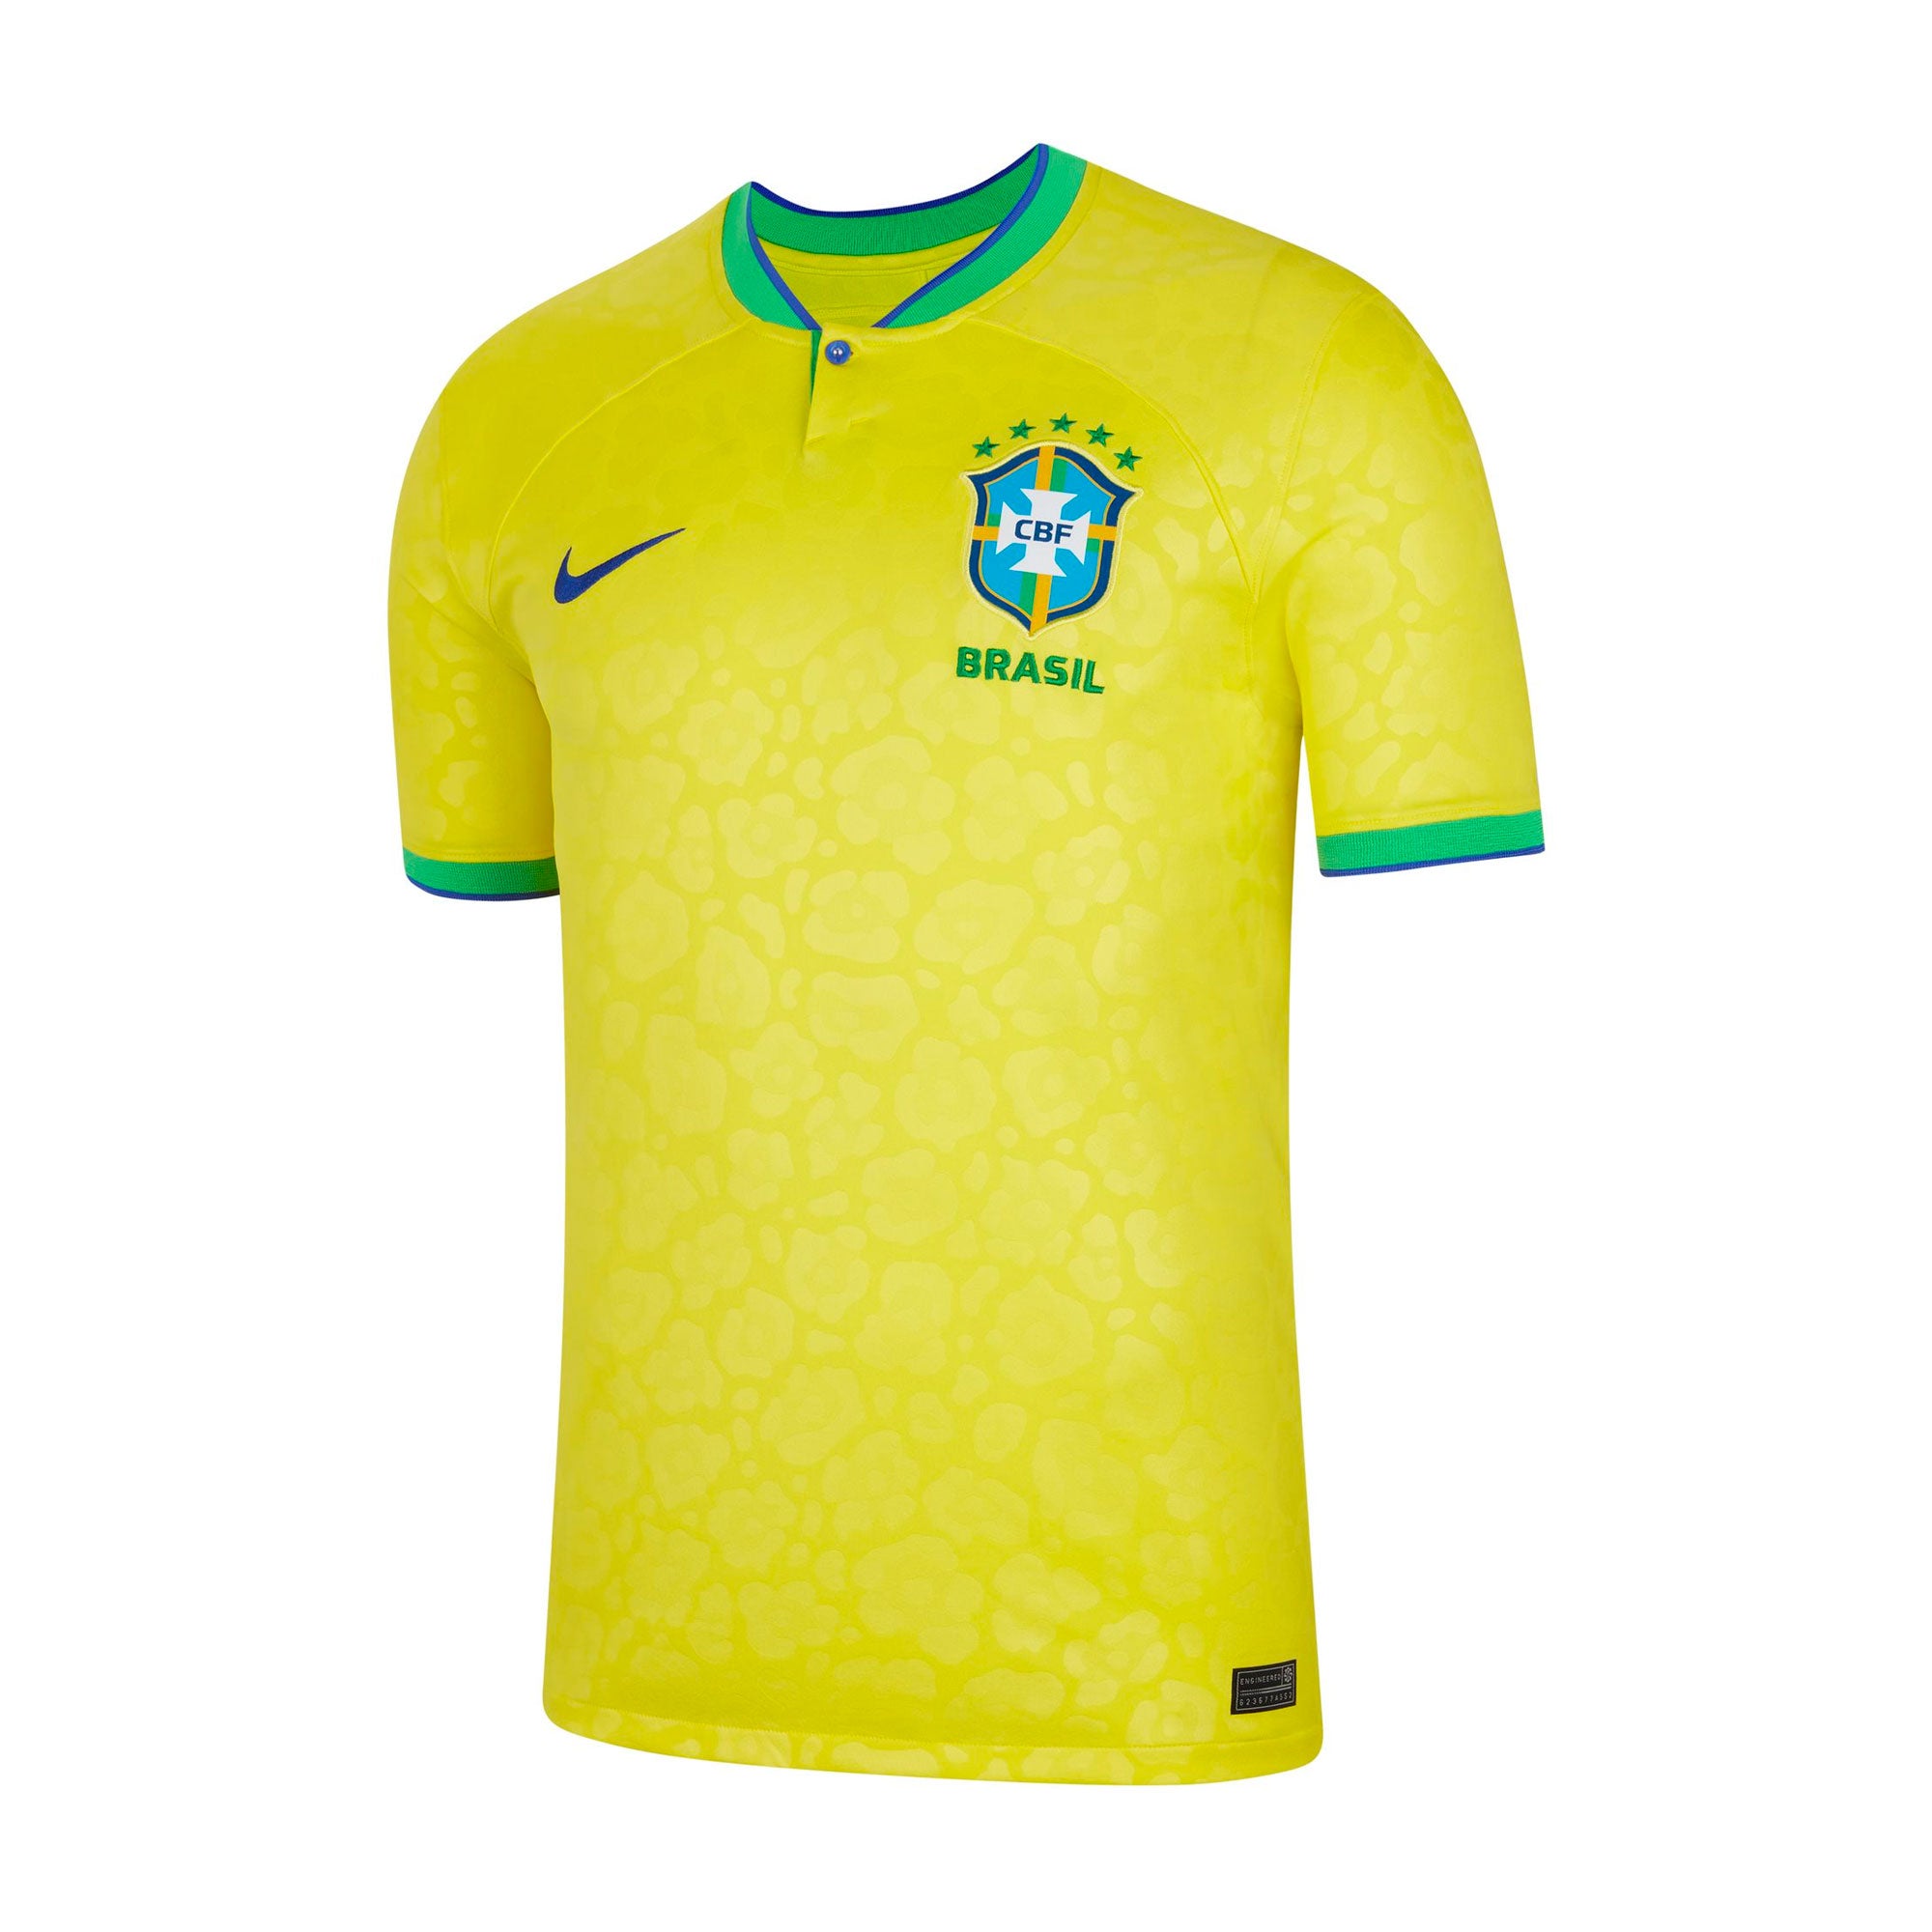 Nike Brasil Pitch Soccer Ball - Green Spark & Dynamic Yellow